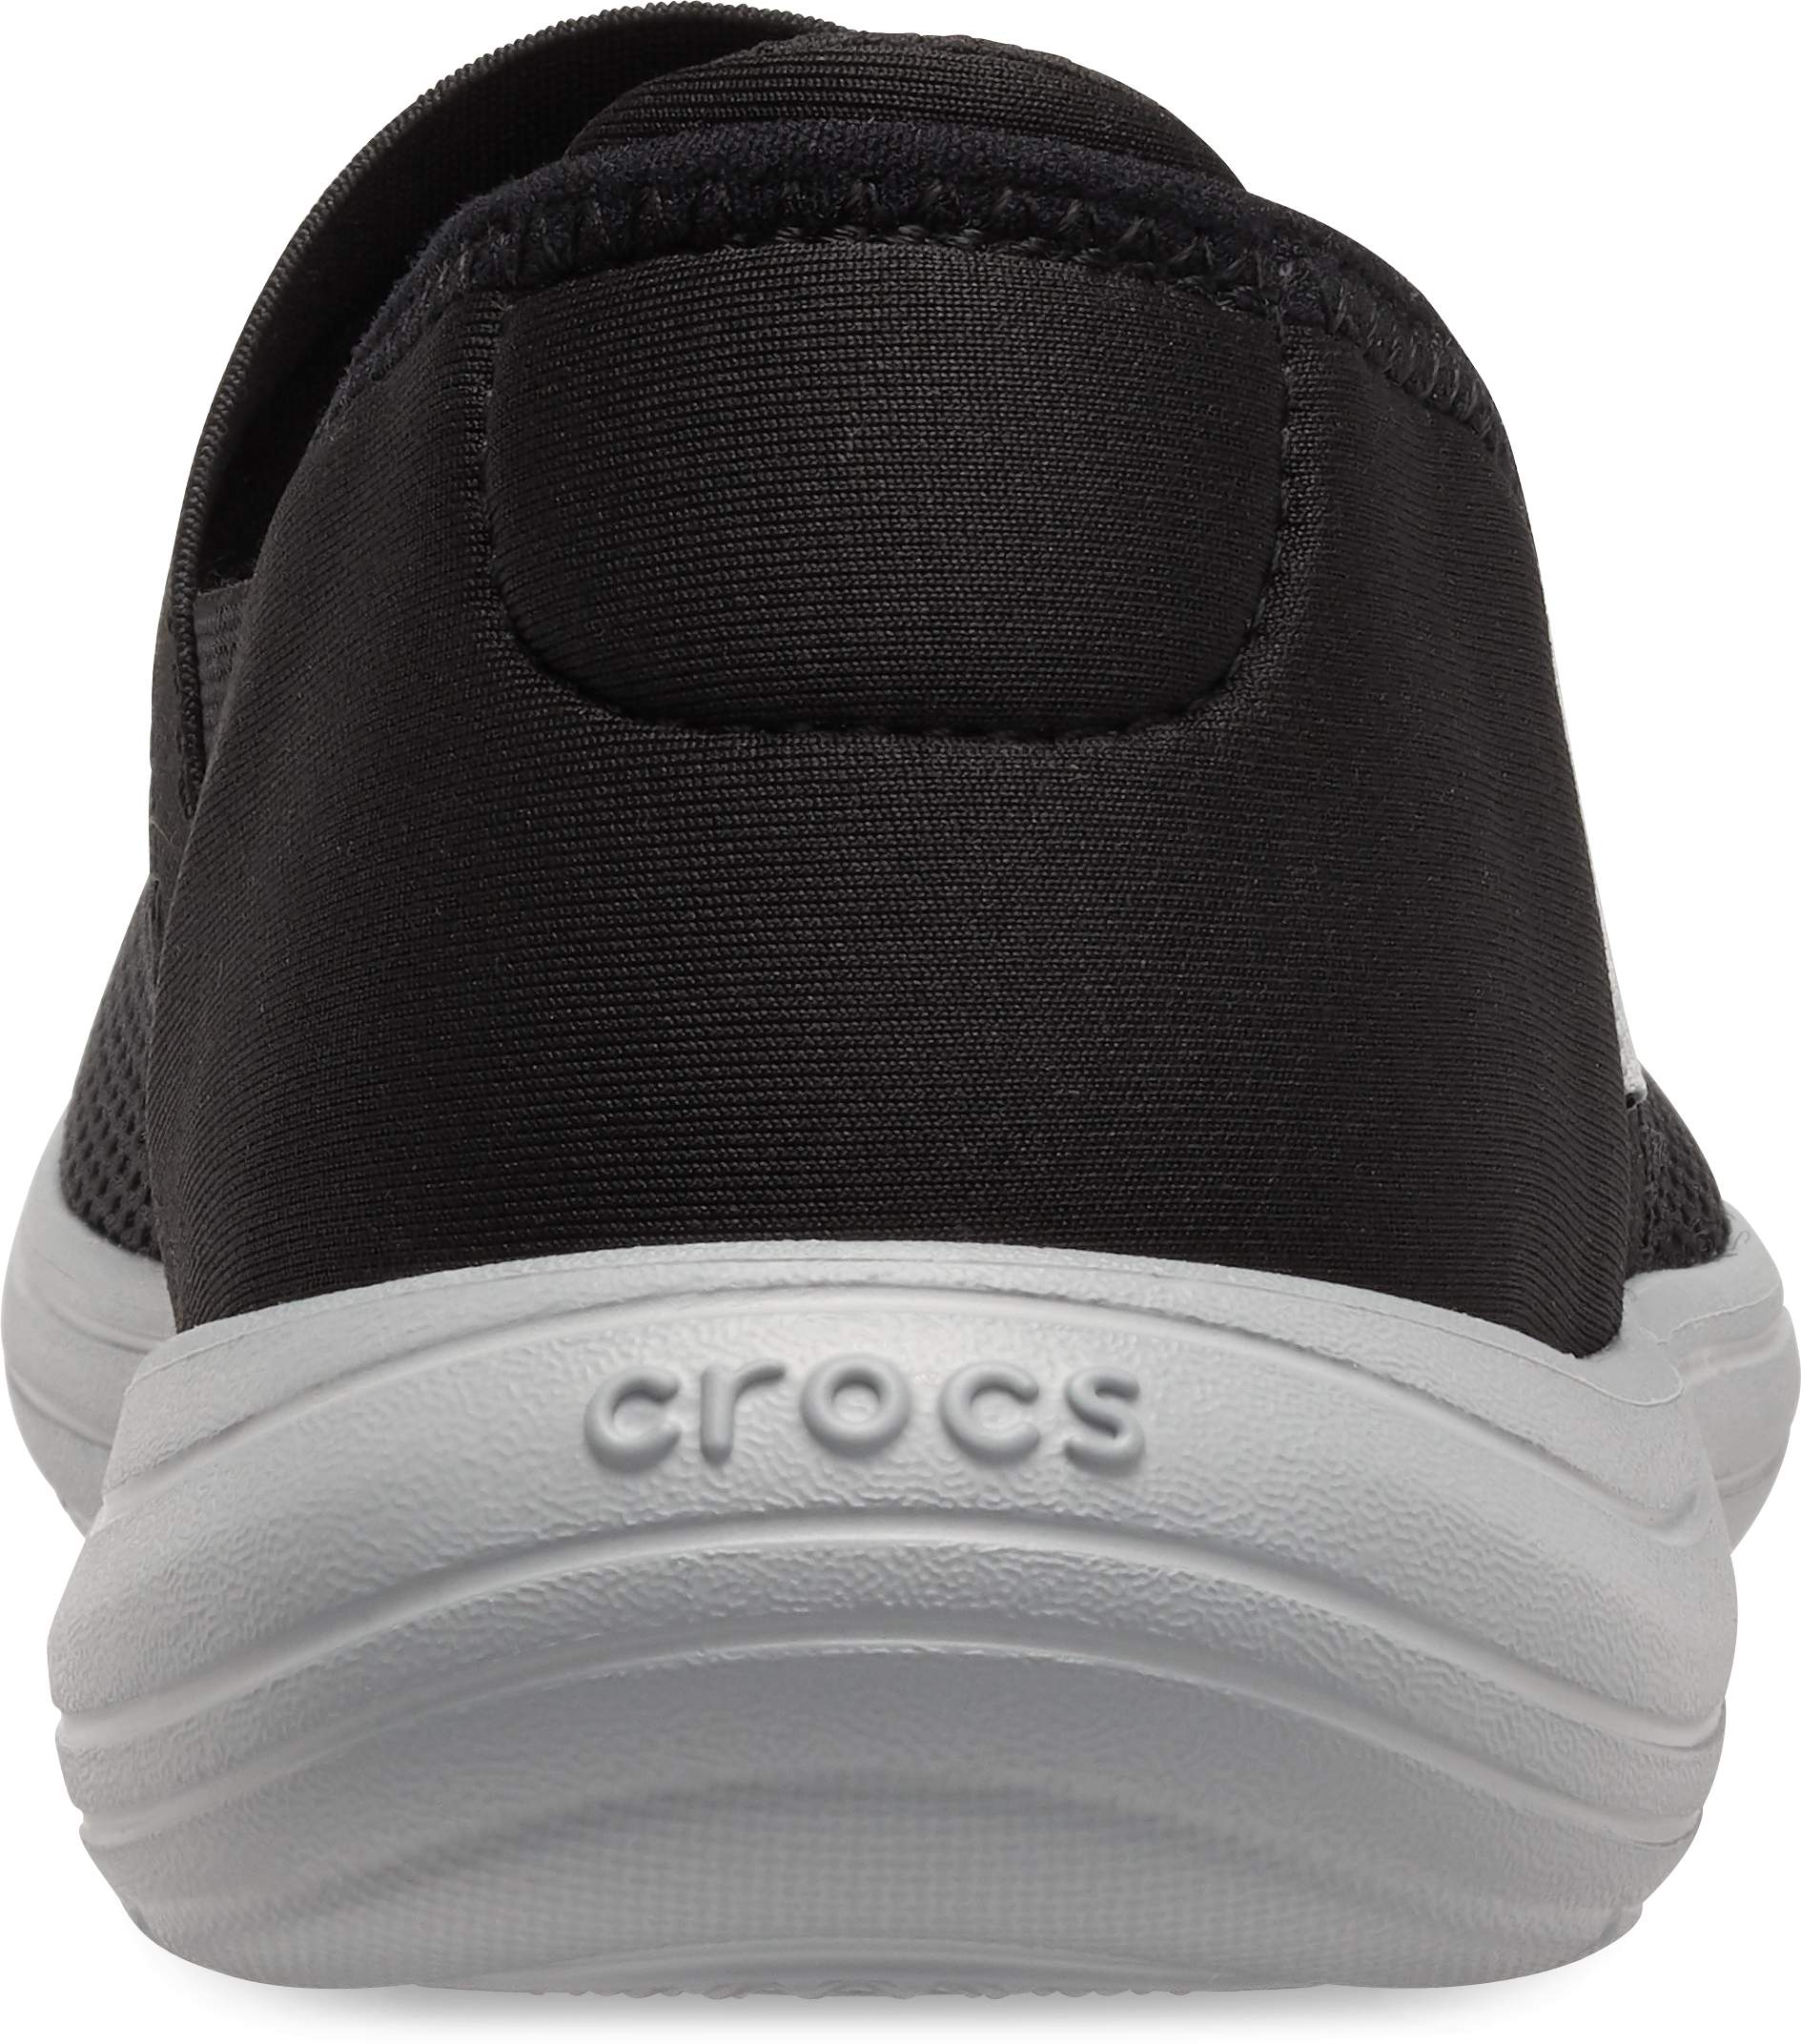 crocs neoprene shoes